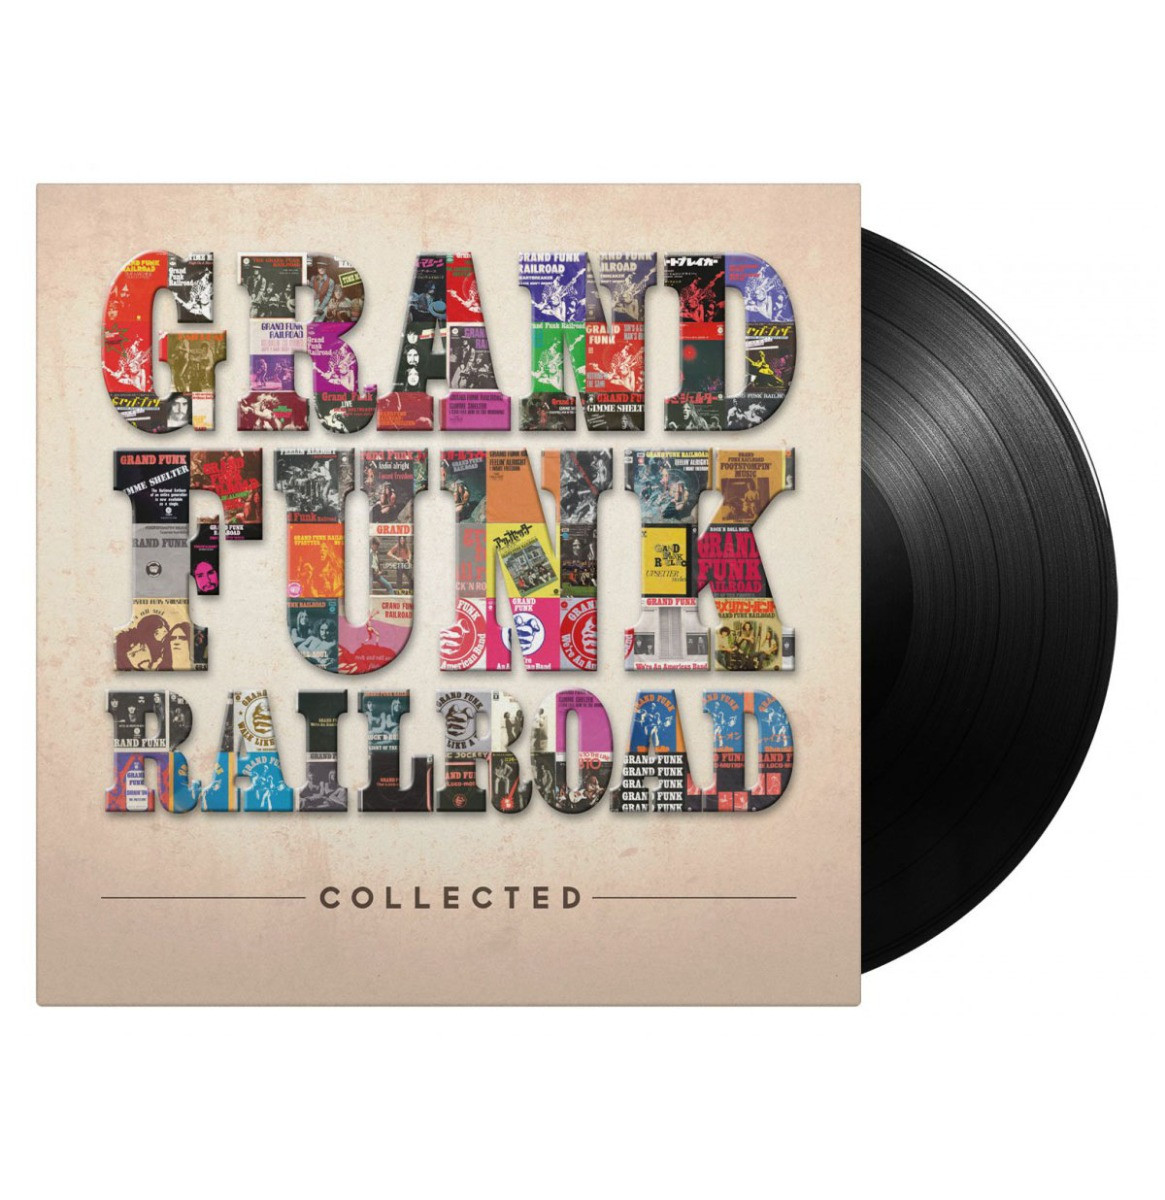 Grand Funk Railroad - Collected 2LP